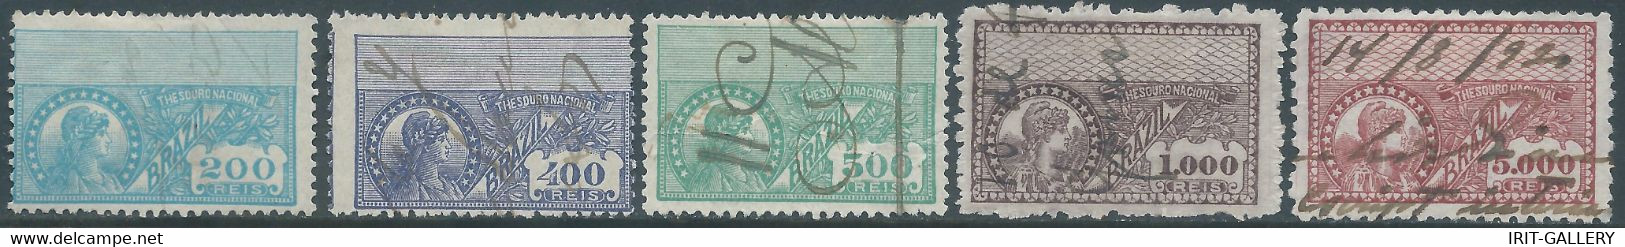 Brasil - Brasile - Brazil,1920 Revenue Stamp Tax Fiscal,National Treasure,Used - Officials